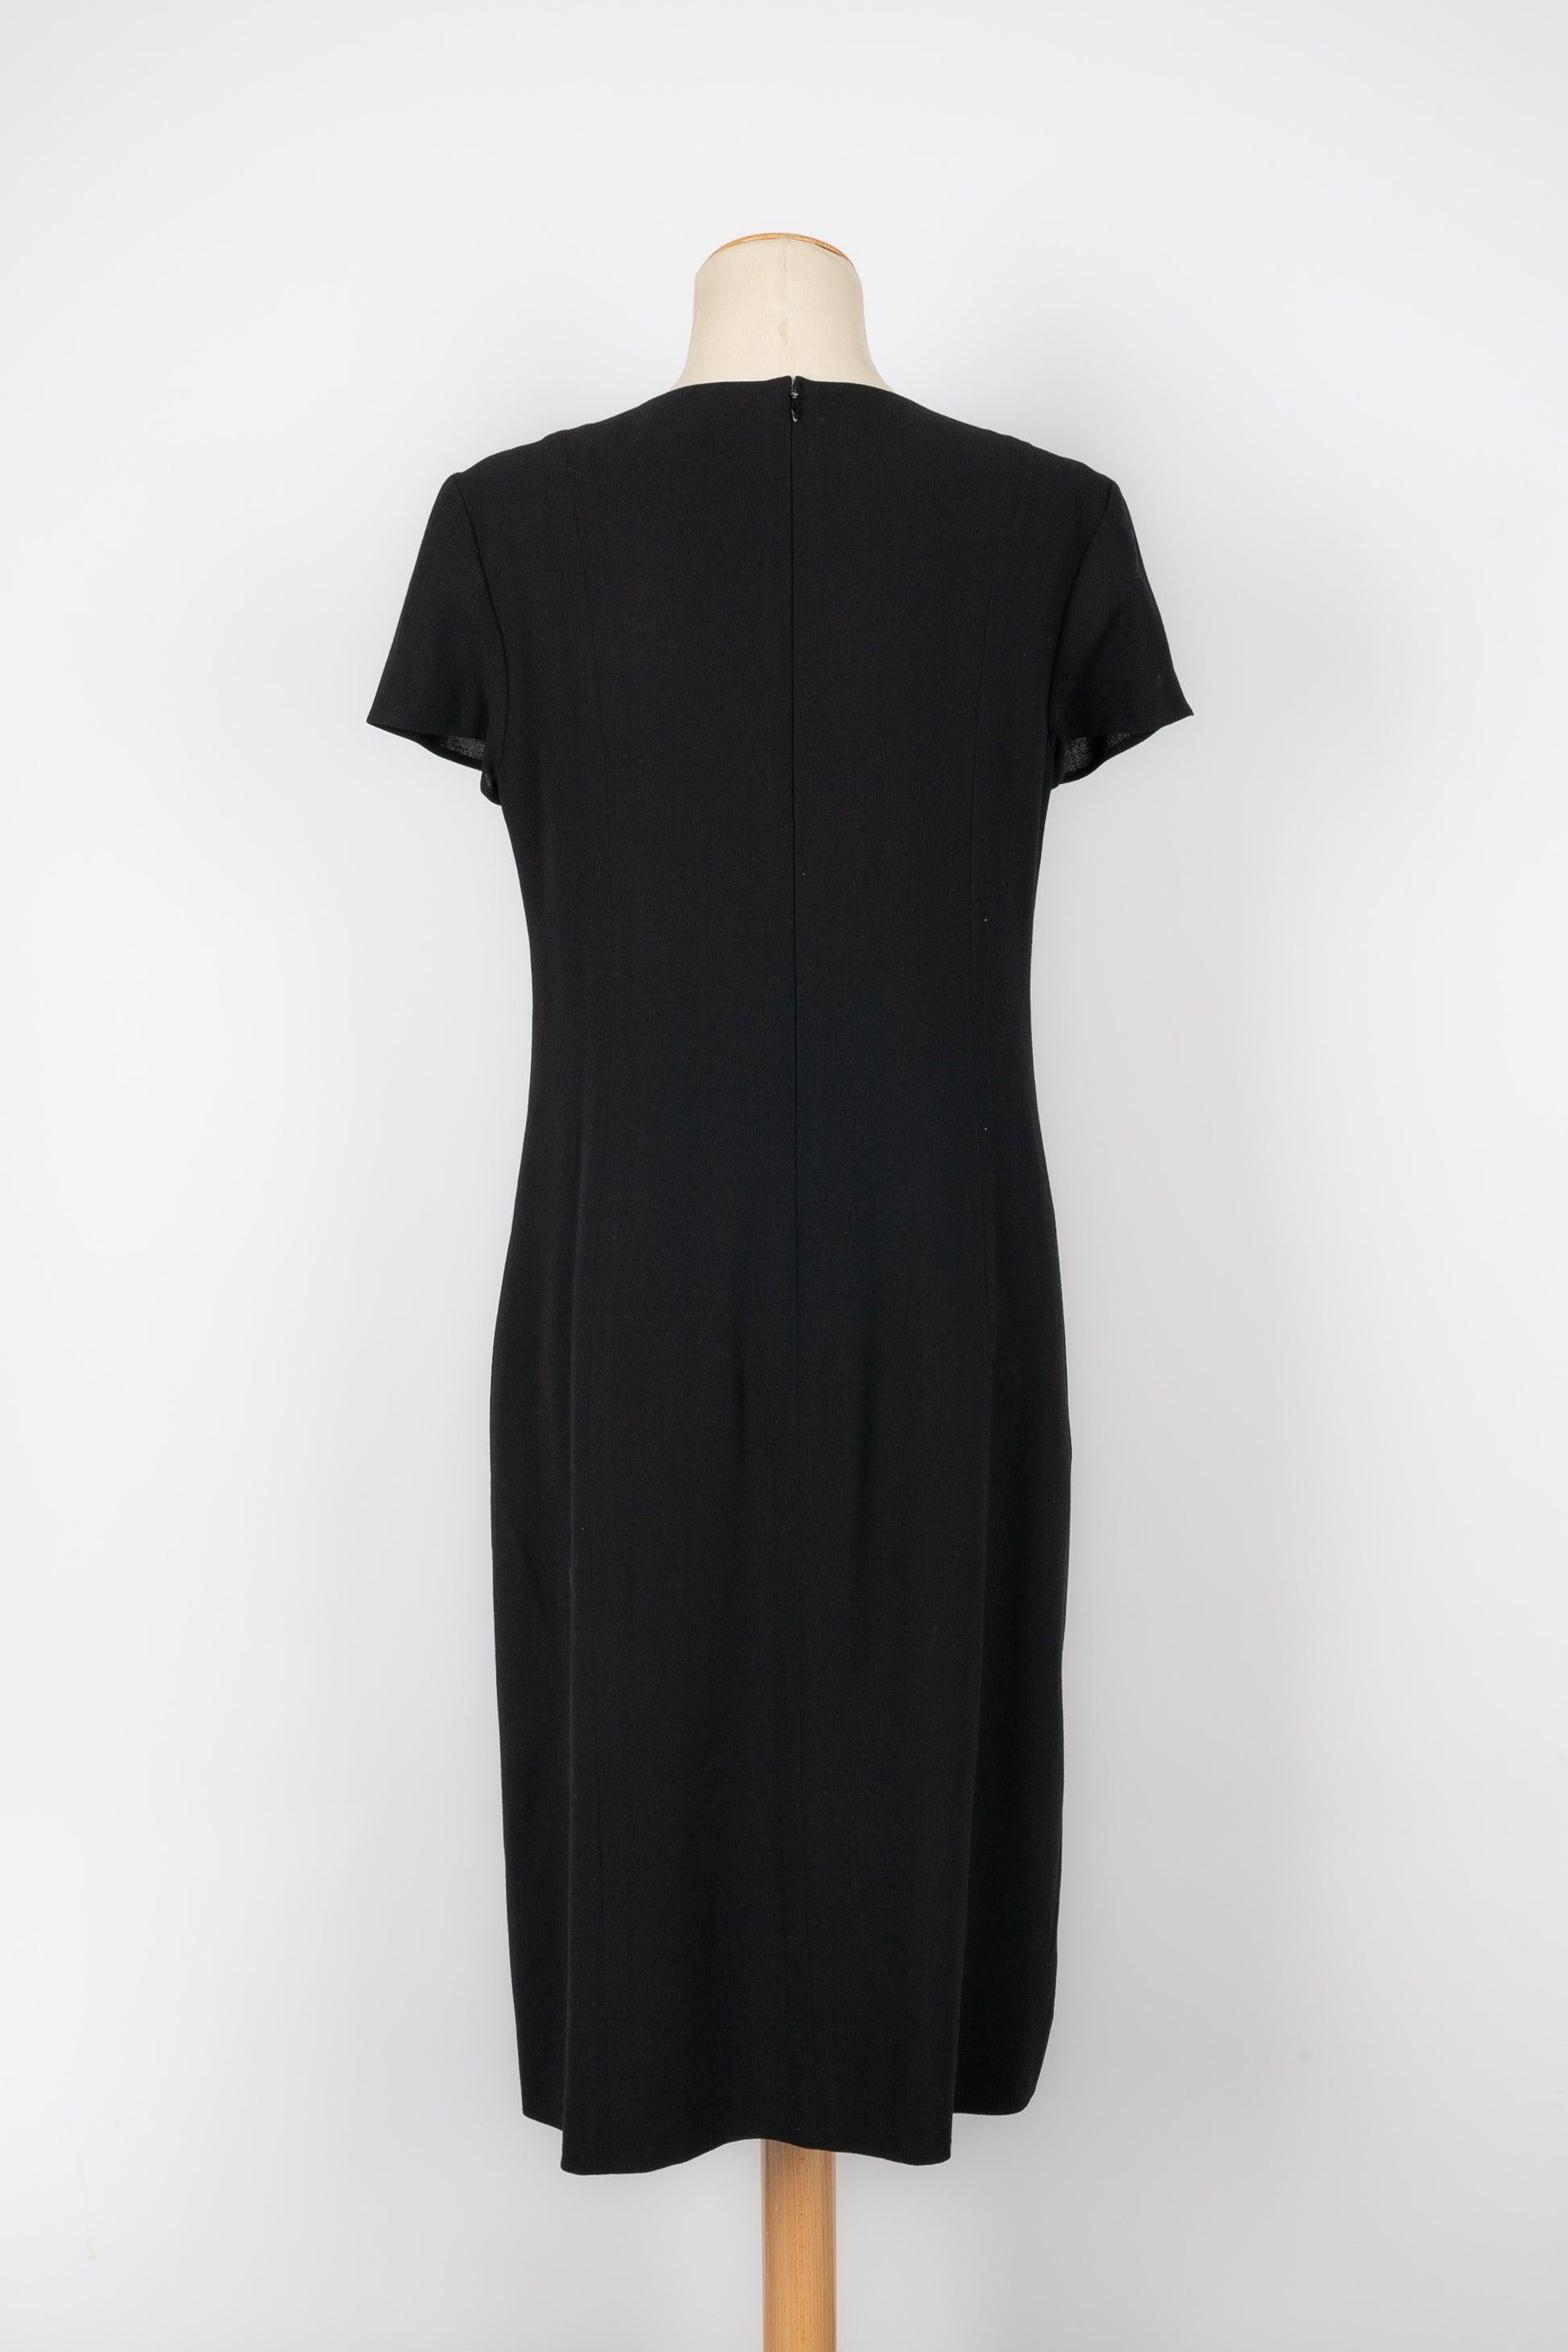 Chanel Black Blended Wool Dress In Excellent Condition For Sale In SAINT-OUEN-SUR-SEINE, FR